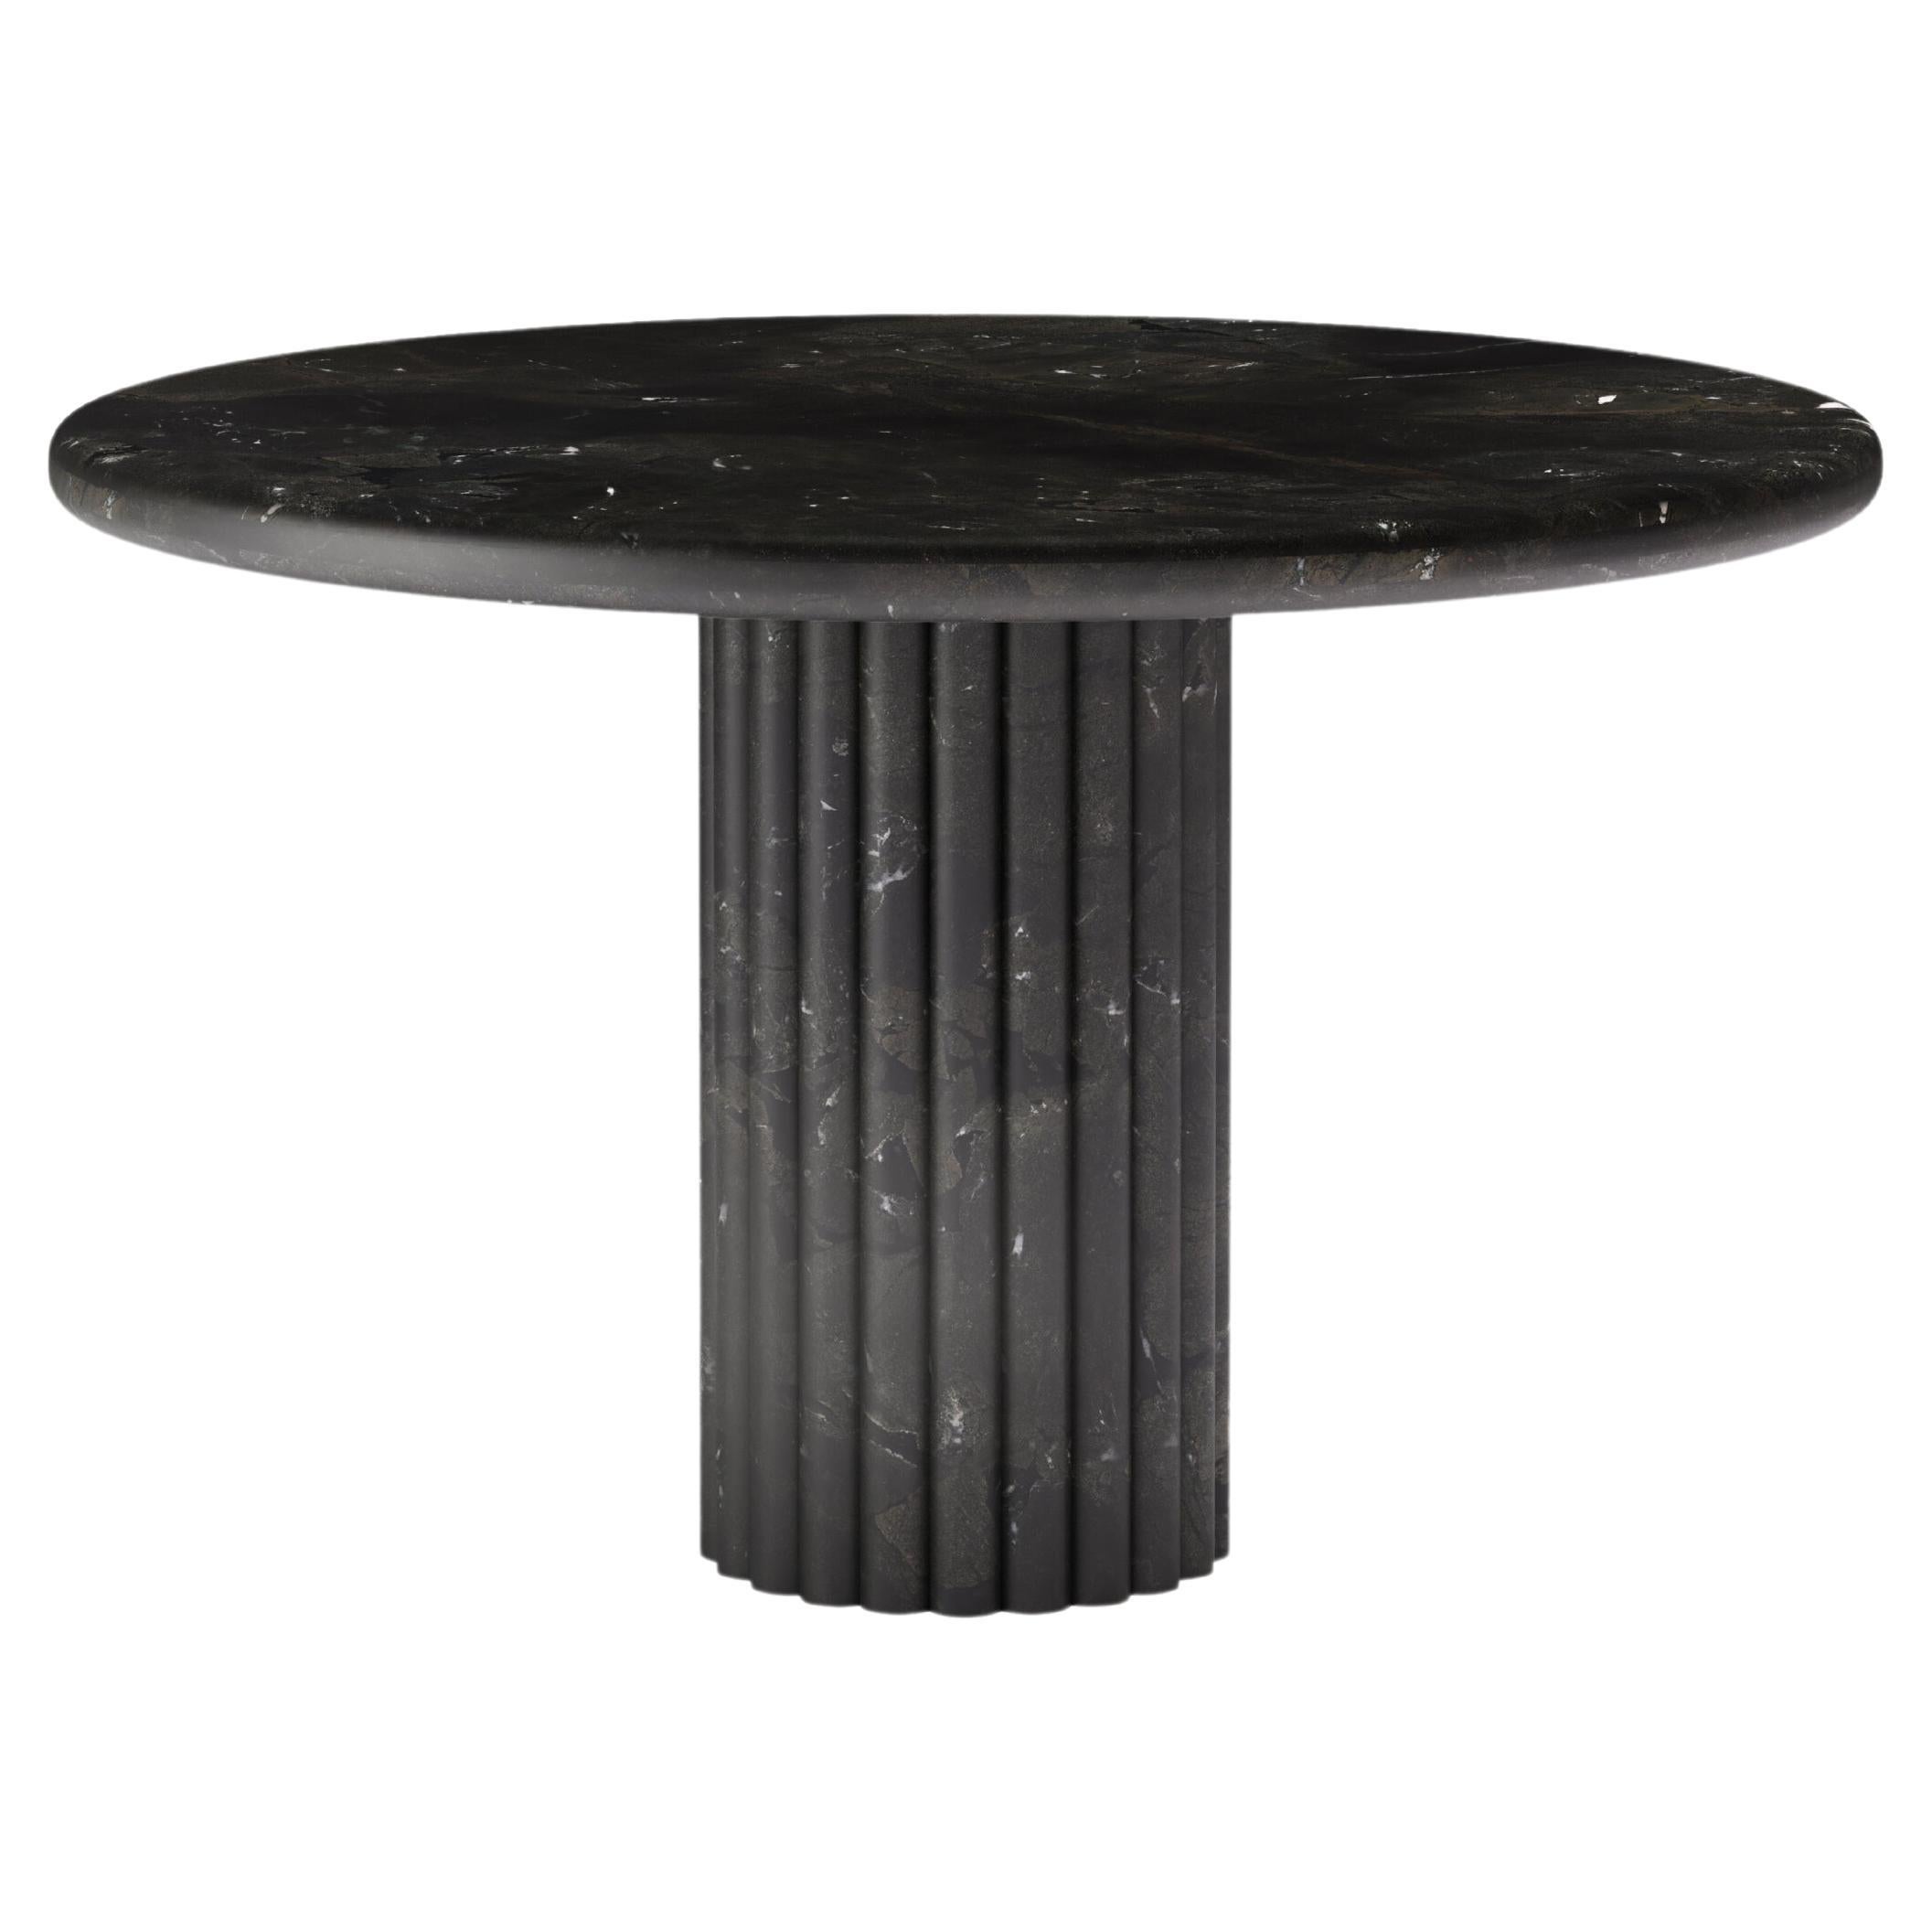 FORM(LA) Fluta Round Dining Table 36”L x 36”W x 30”H Negresco Quartzite For Sale